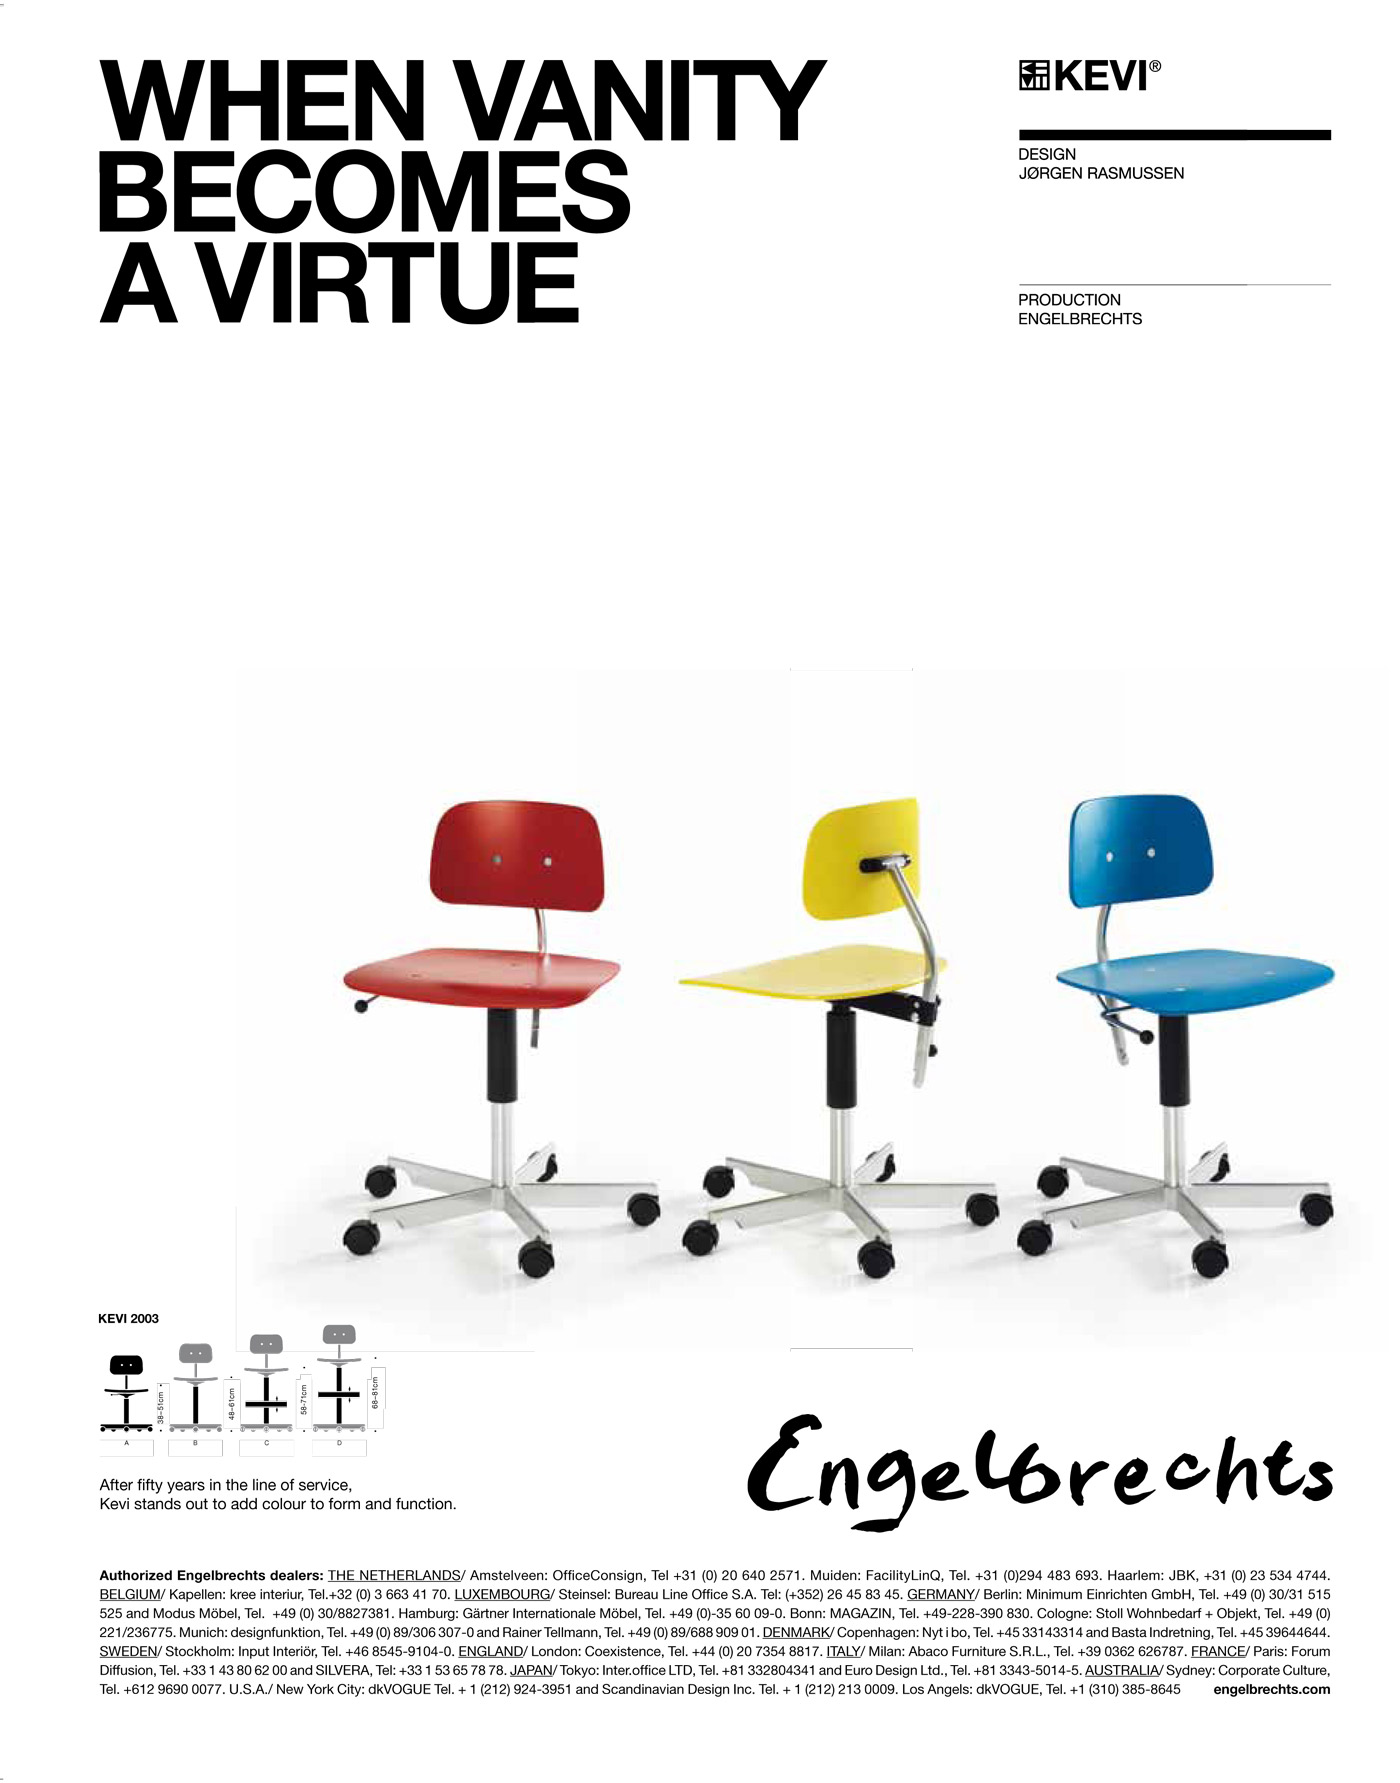 Engelbrechts – KEVI® advertising 2008-2010